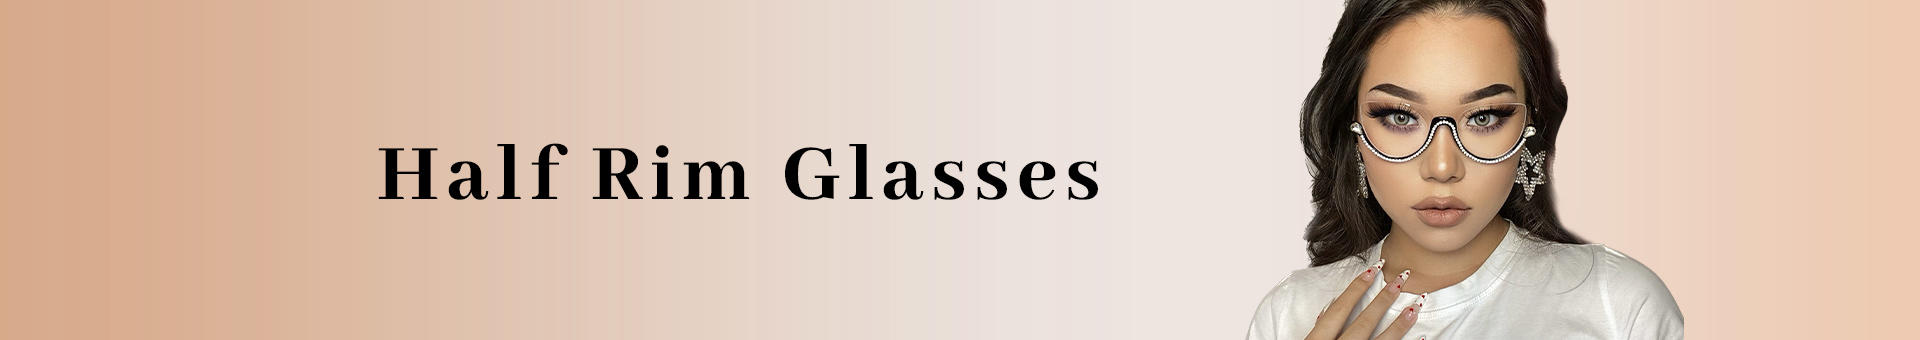 Half Rim Glasses